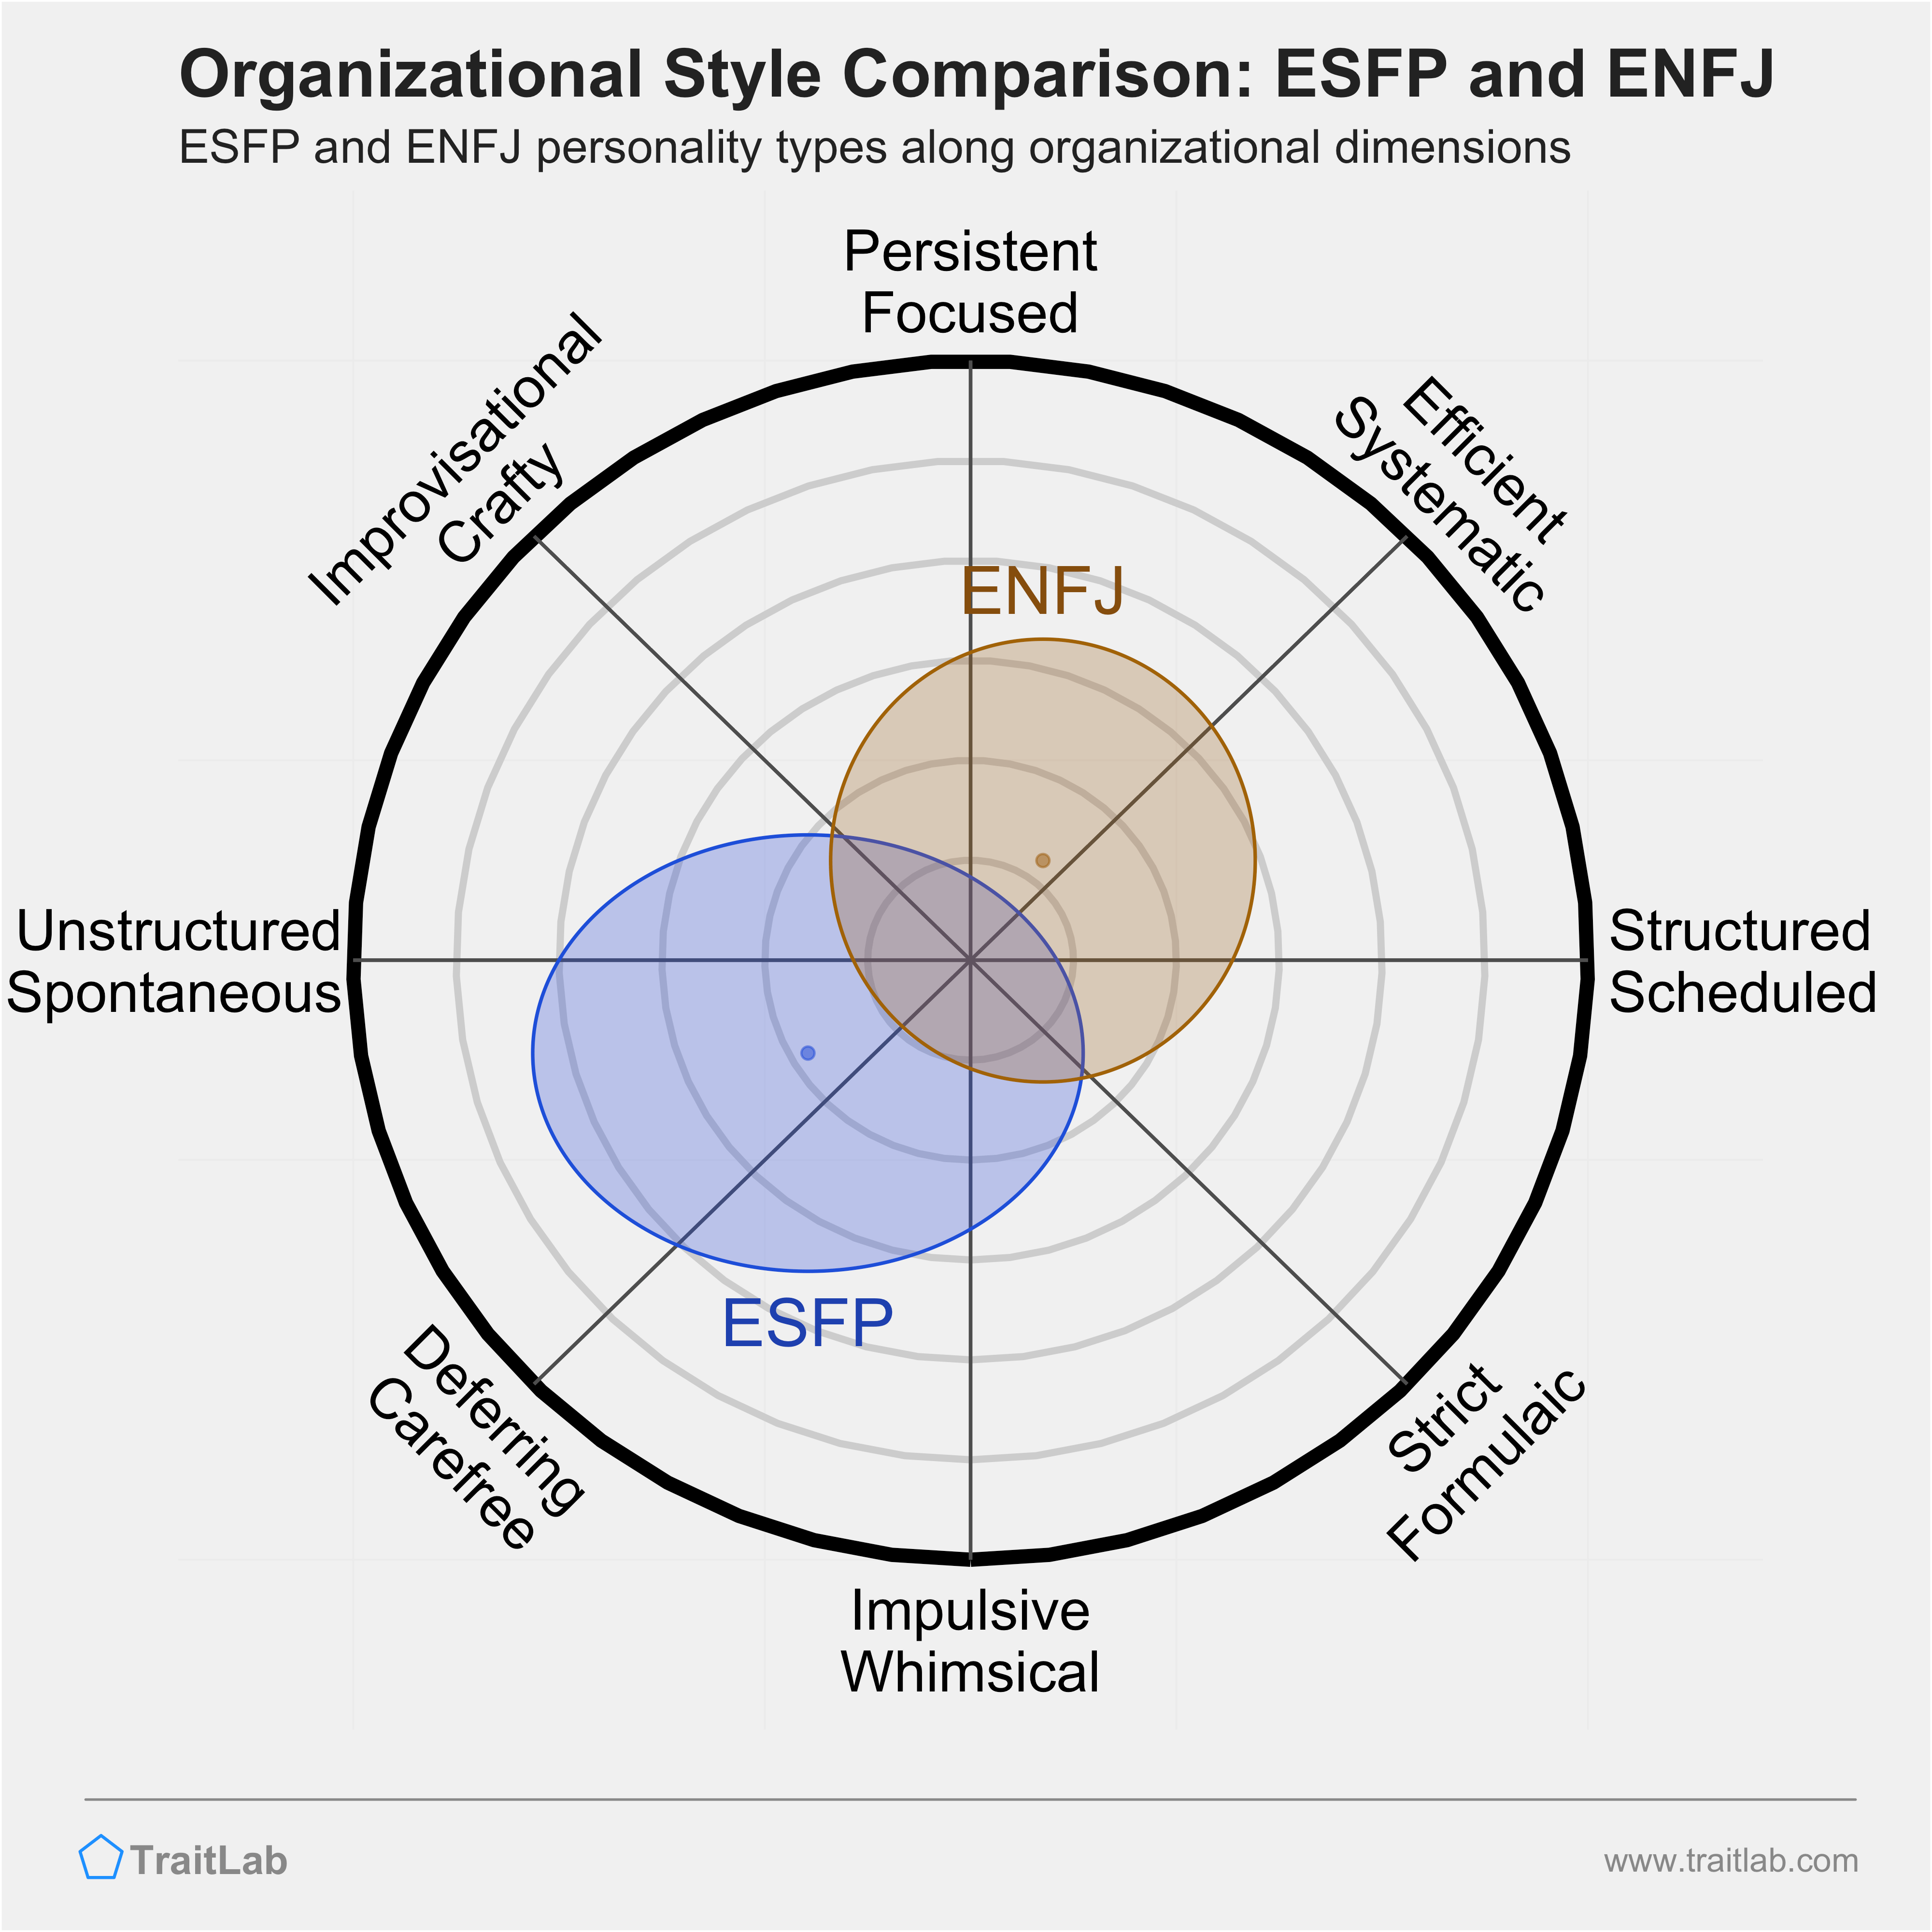 ESFP and ENFJ comparison across organizational dimensions